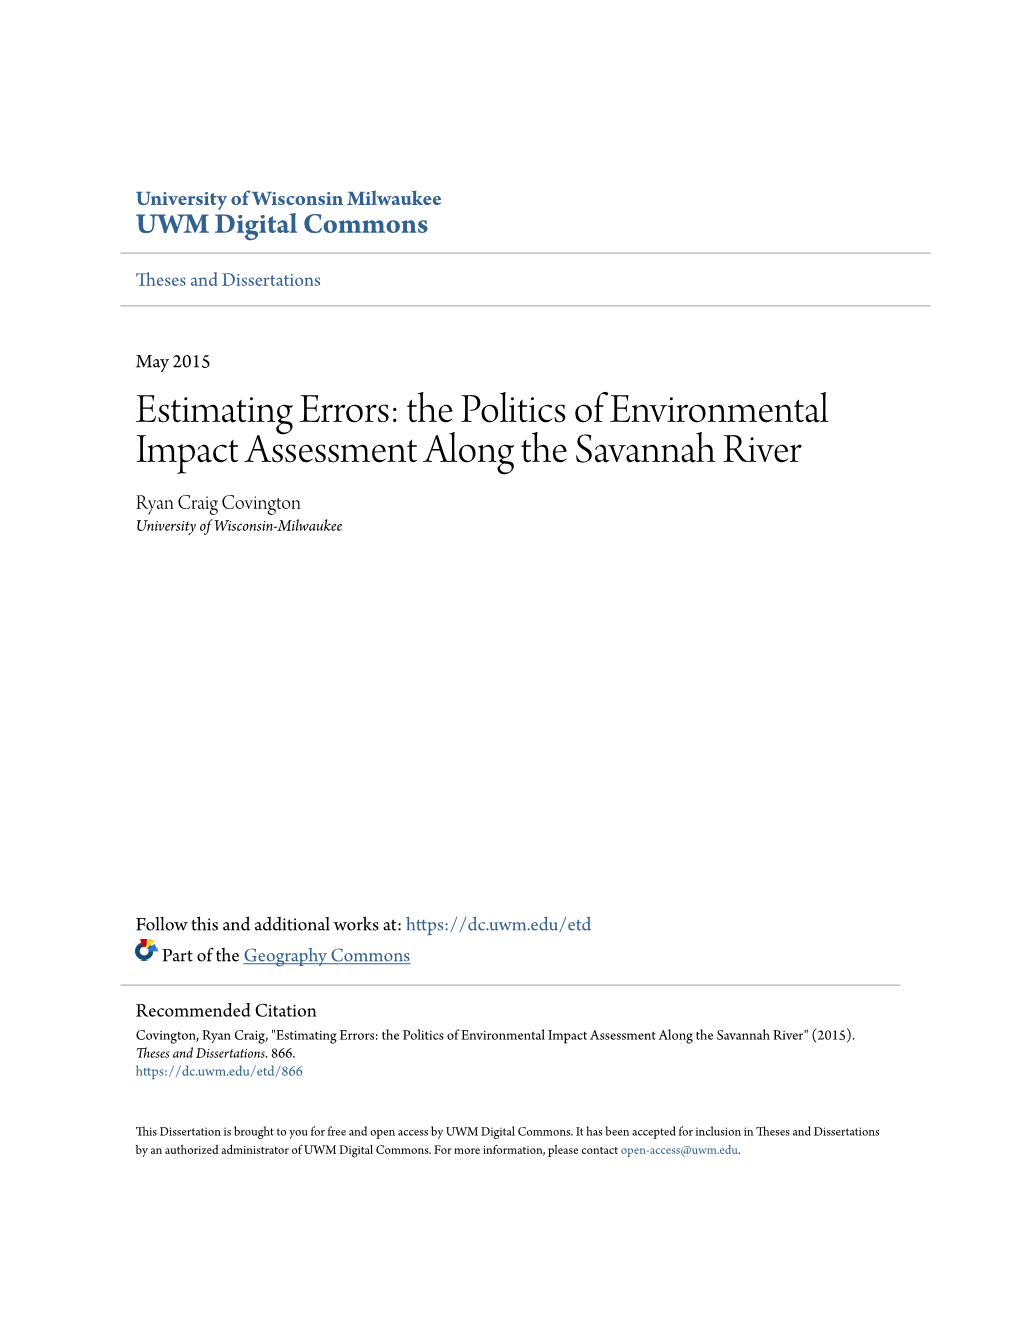 The Politics of Environmental Impact Assessment Along the Savannah River Ryan Craig Covington University of Wisconsin-Milwaukee